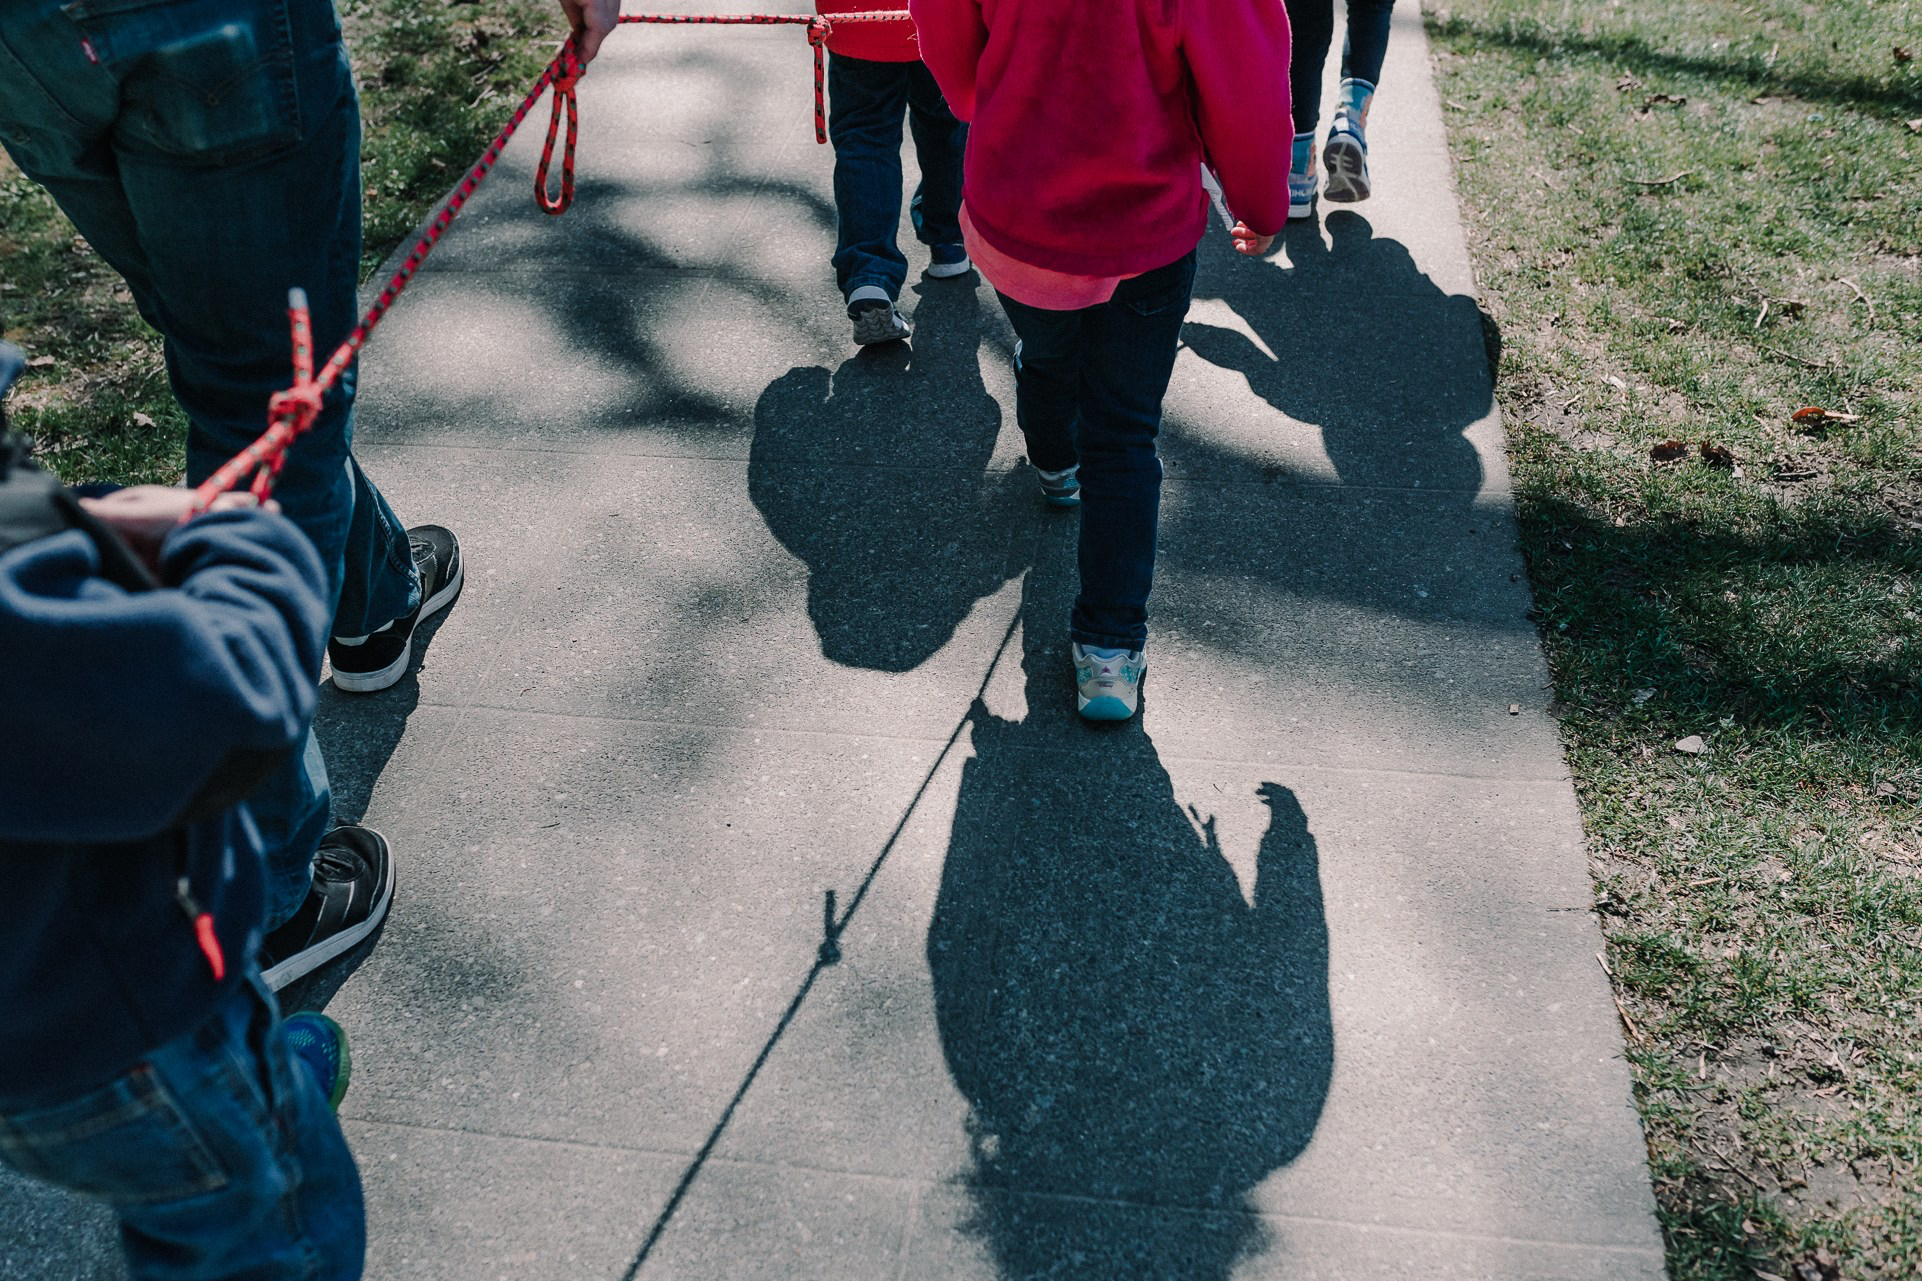 University-Ravenna Cooperative Preschool : Walking outside using a child safety walking rope